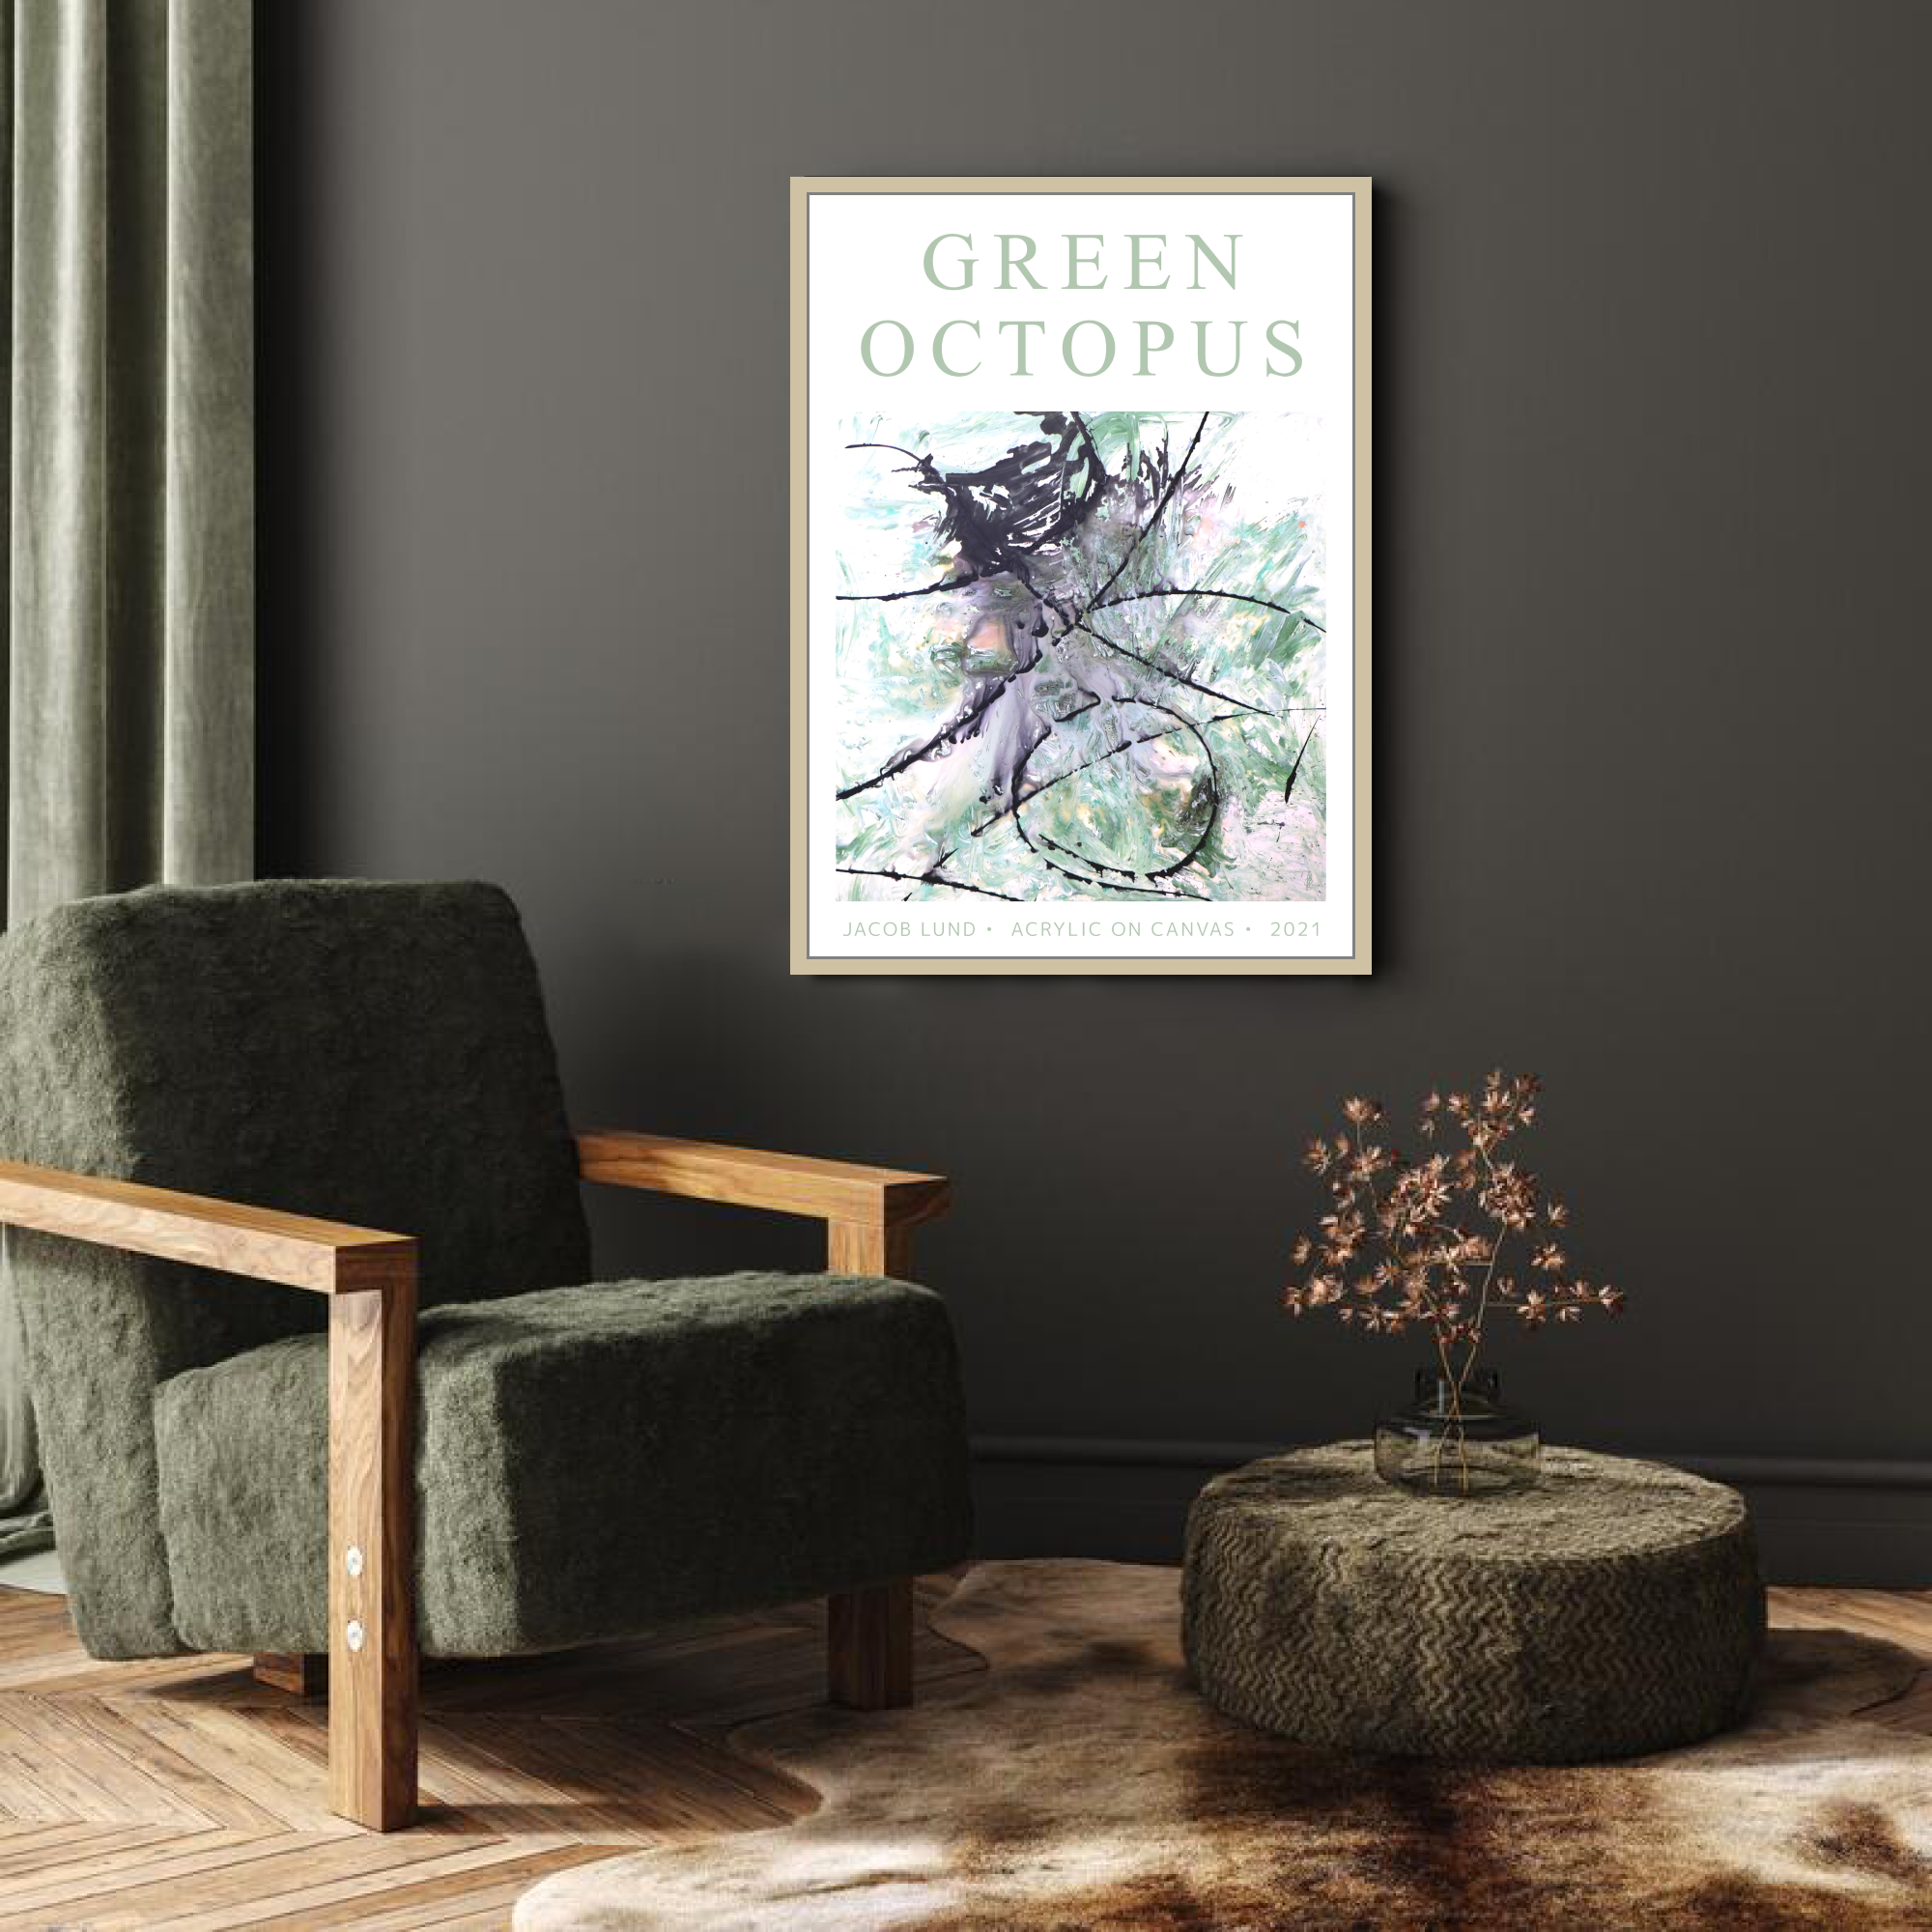 Poster: "Green Octopus"